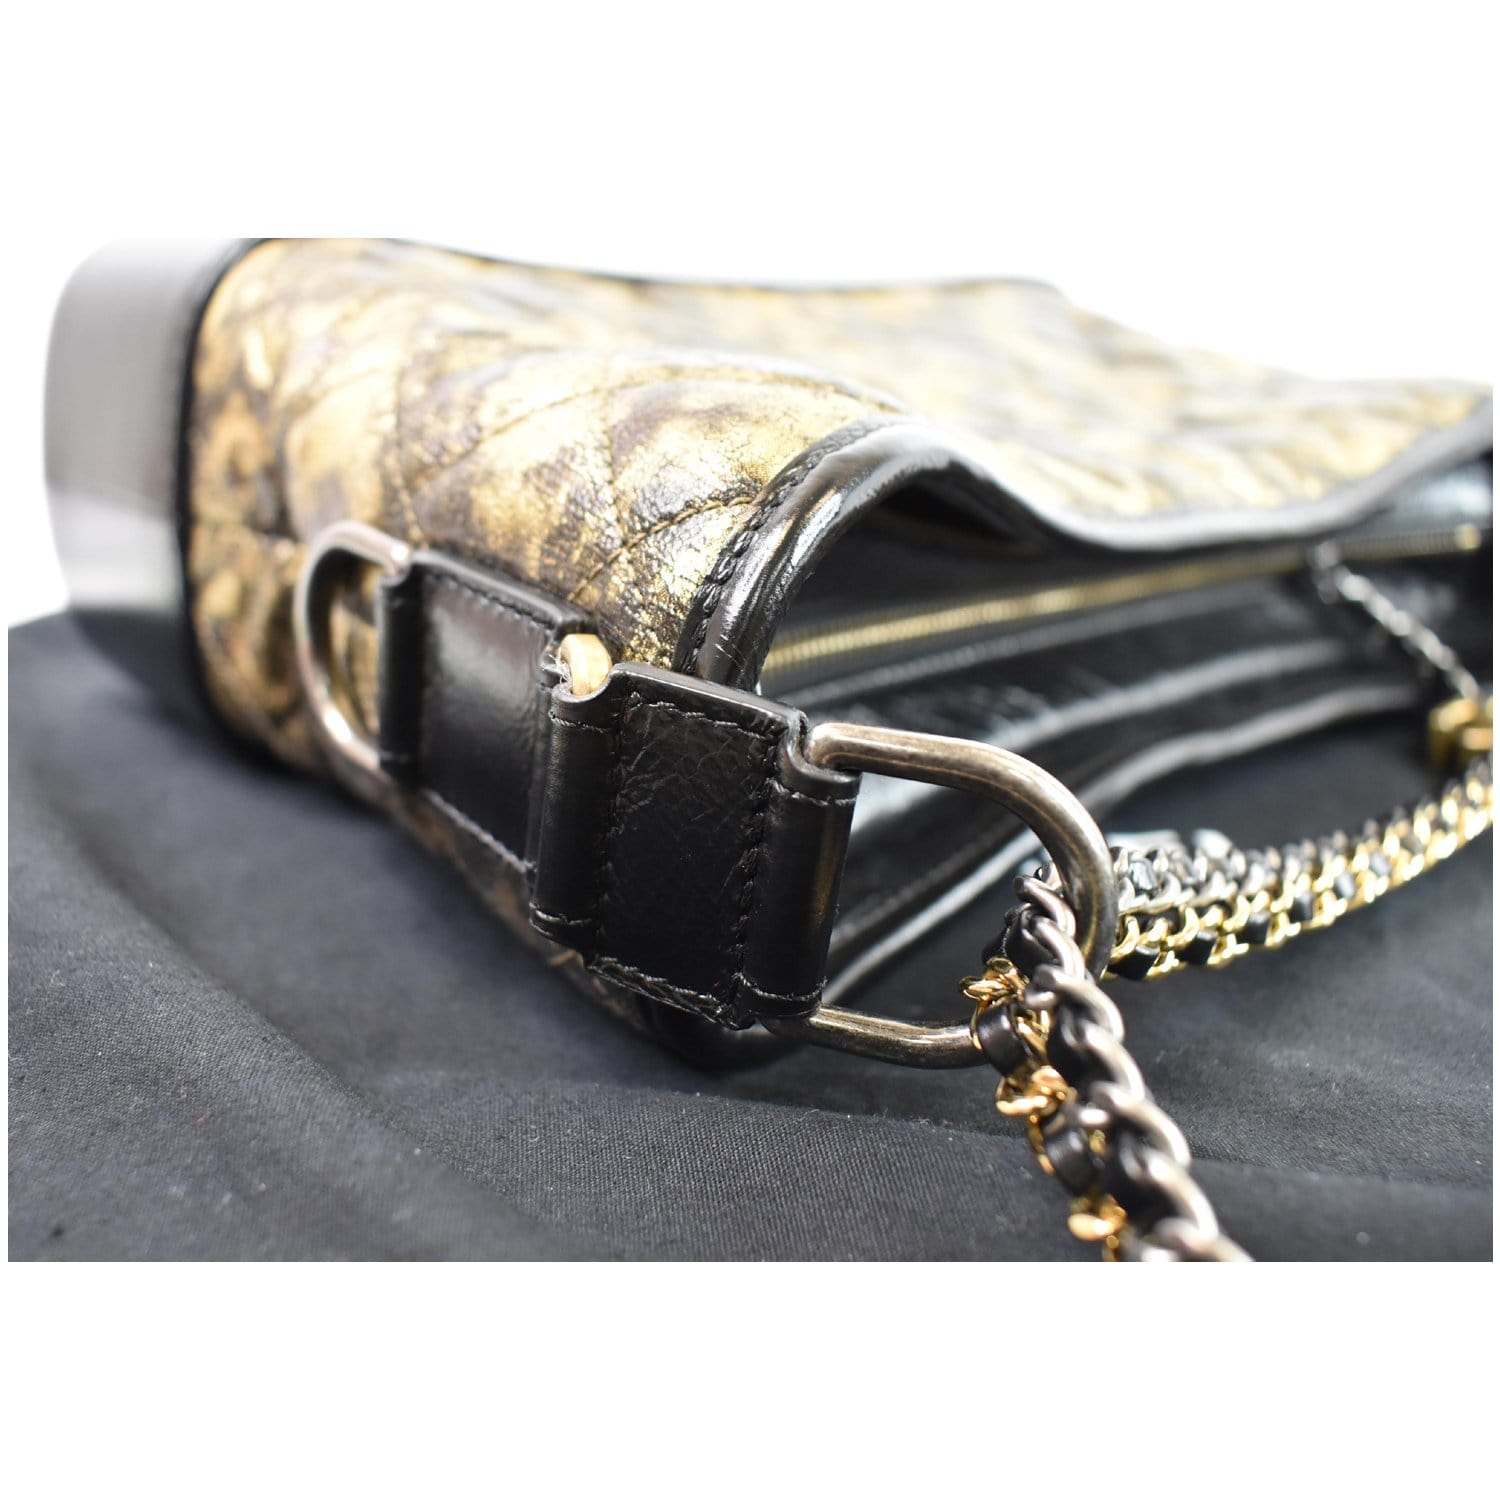 Chanel Metallic Gold Crocodile Embossed Medium Gabrielle Hobo Aged Gold and Ruthenium Hardware, 2019 (Like New), Womens Handbag